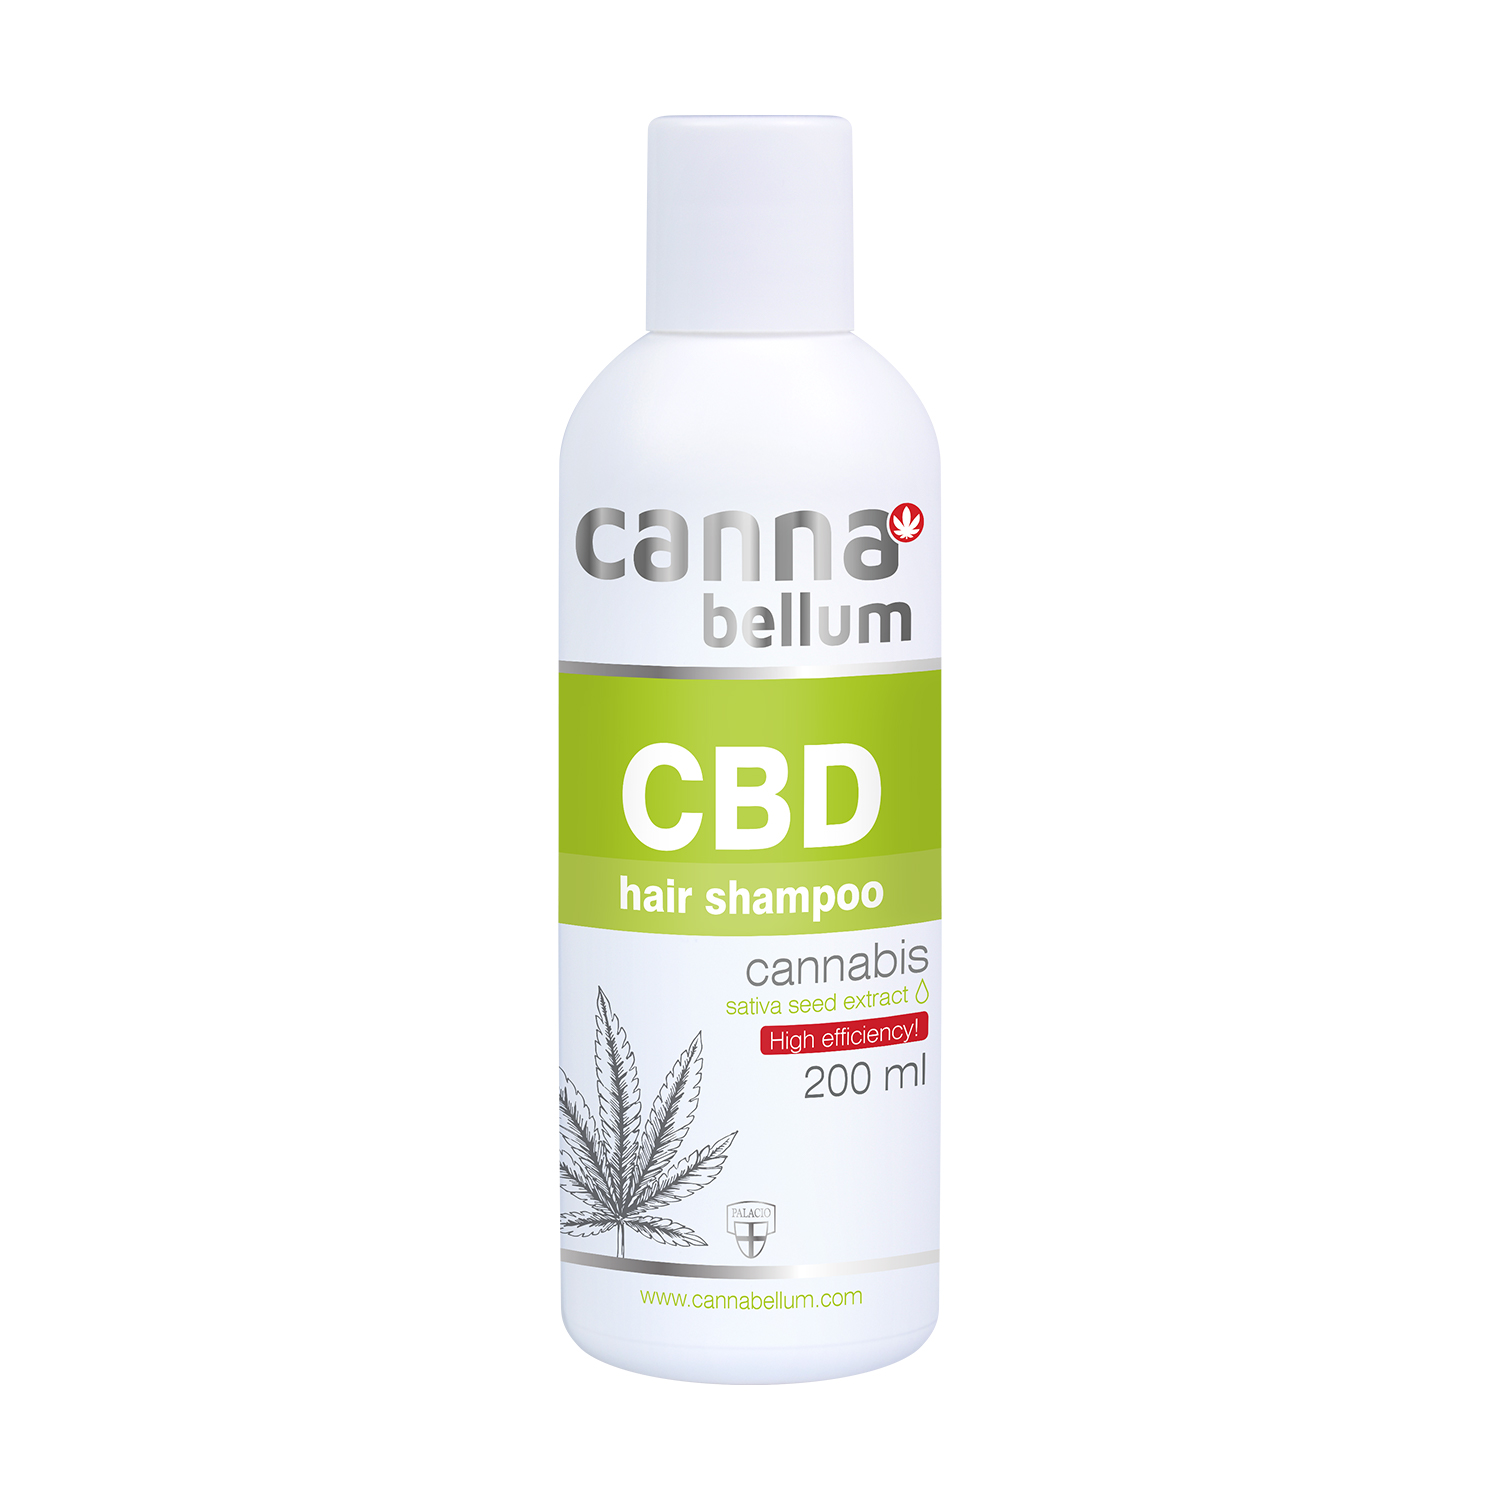 Cannabellum CBD hair shampoo 200ml P1251 WEB 52